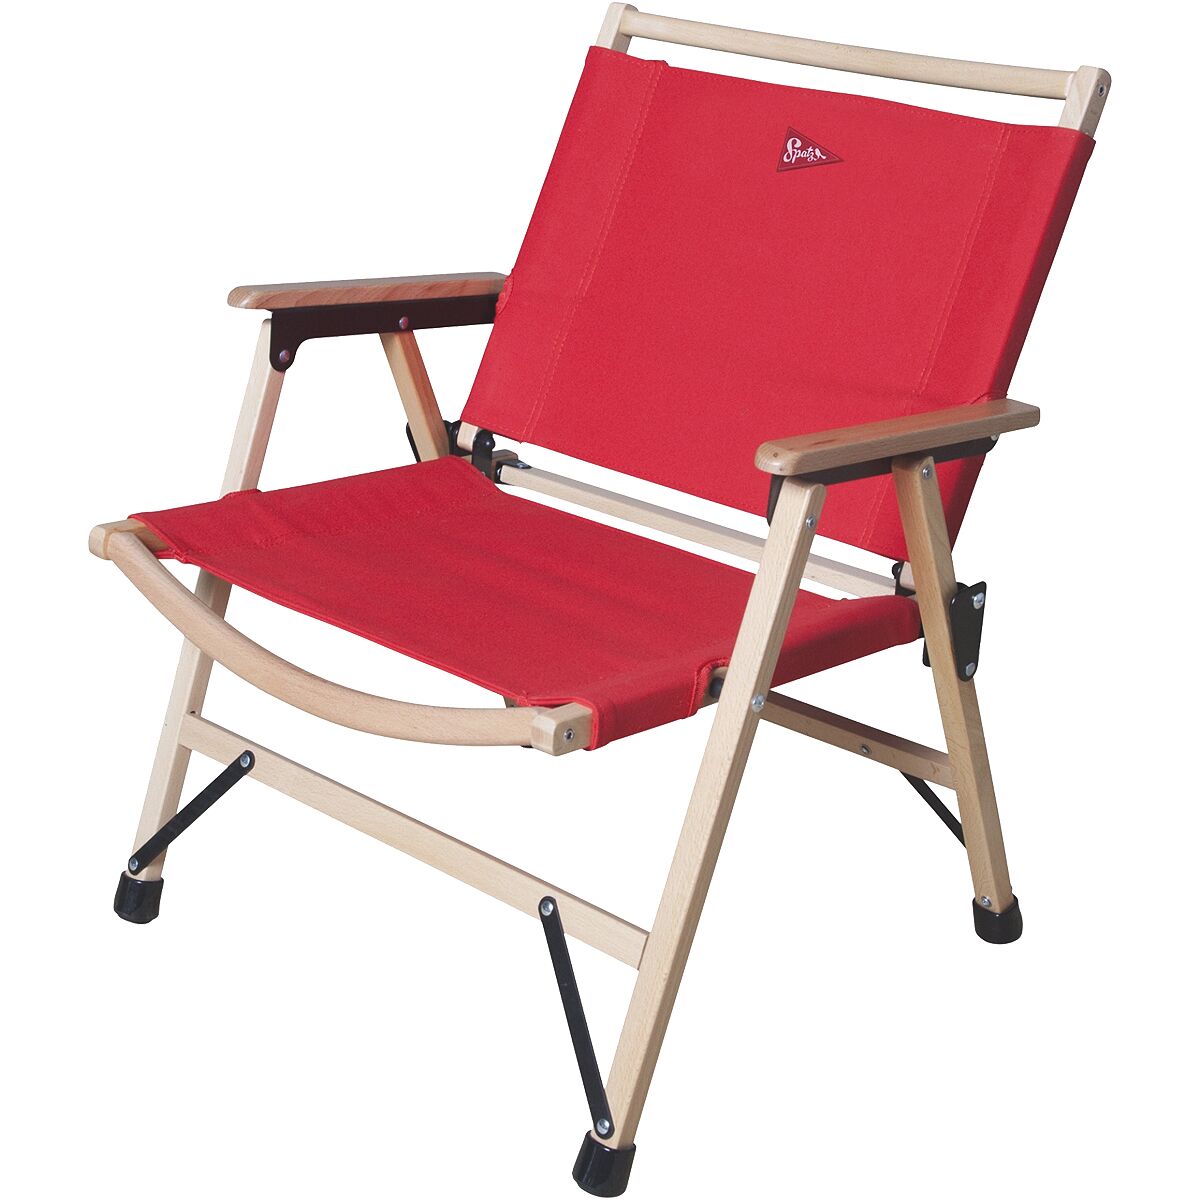 SPATZ Woodstar Chair